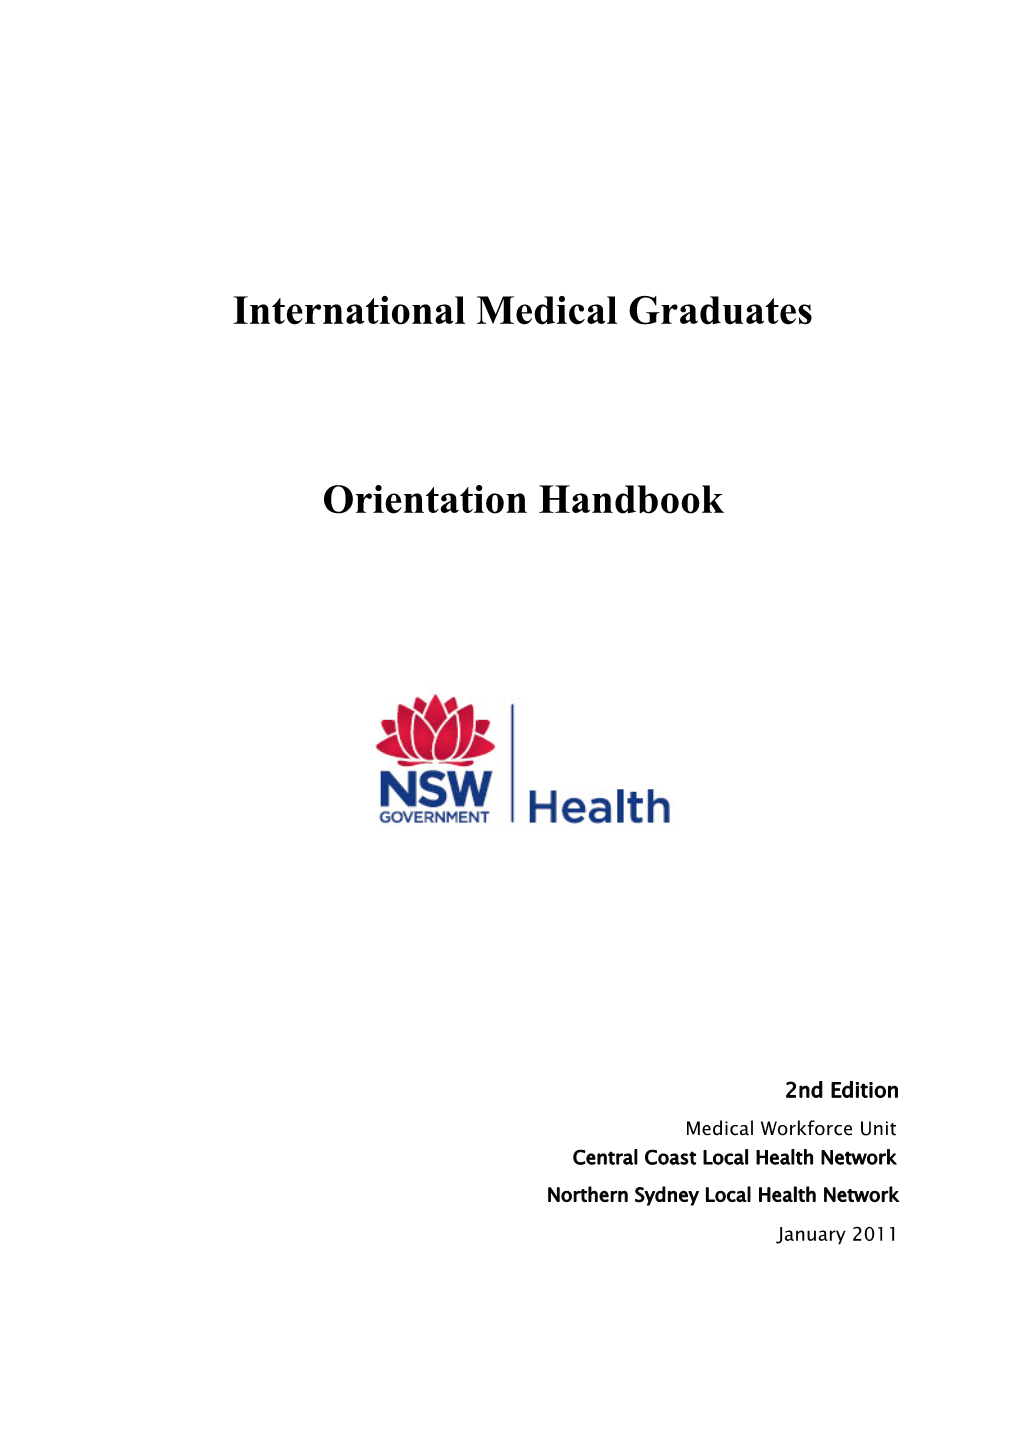 International Medical Graduates Orientation Handbook